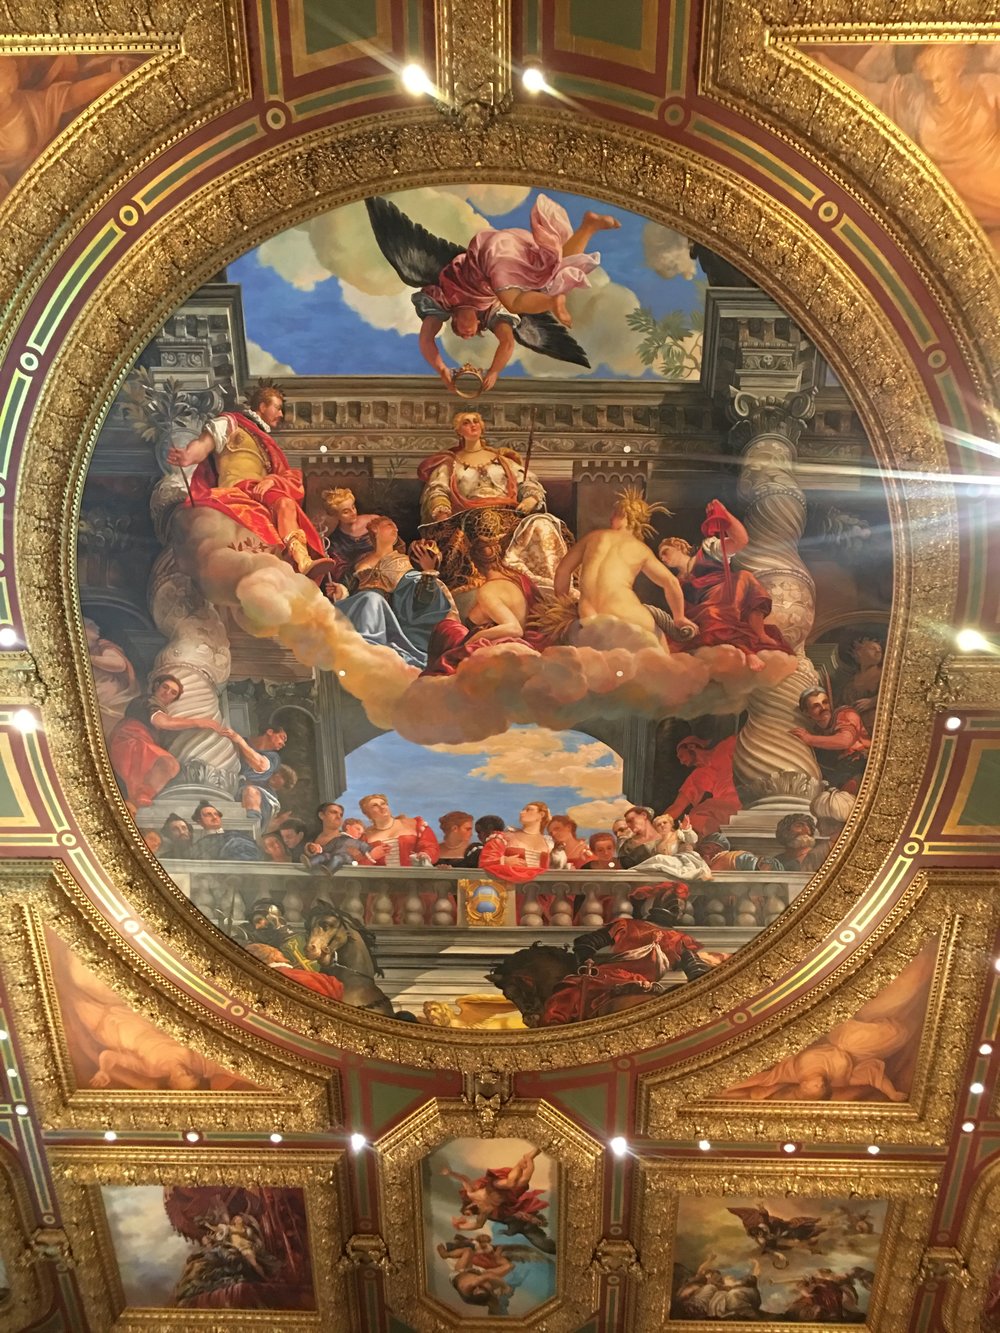 The Venetian ceiling